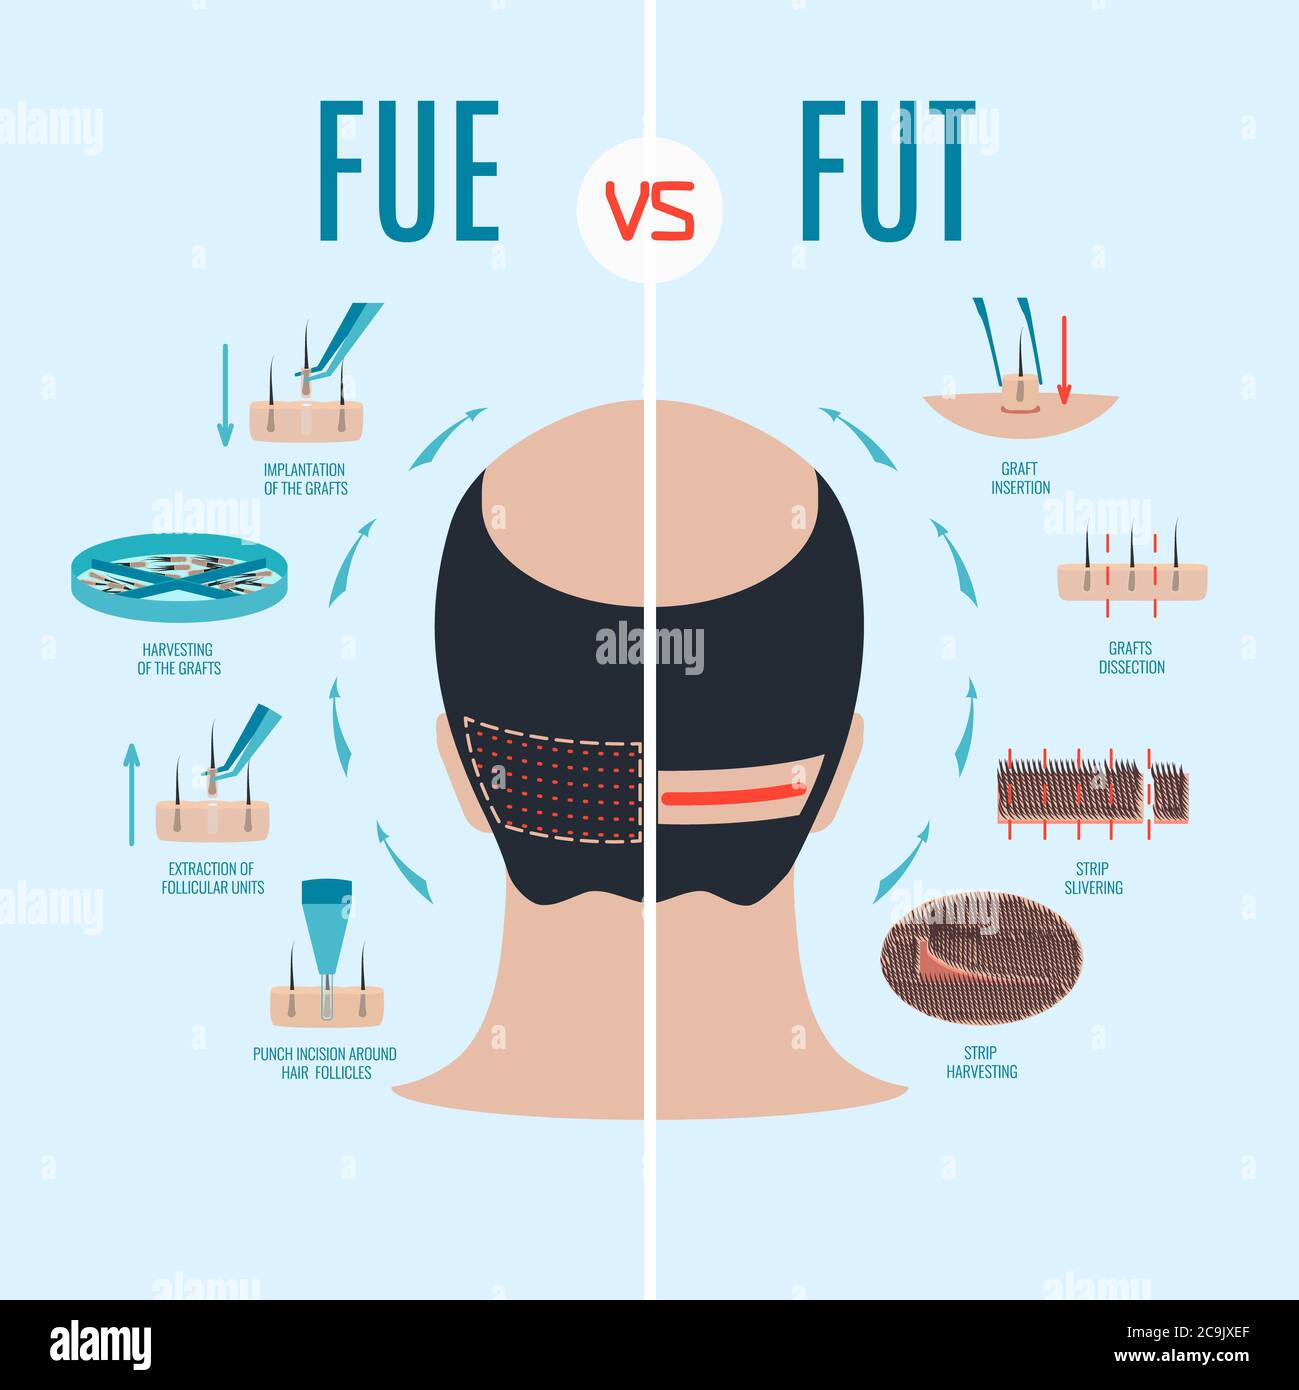 Follikuläre Einheit Extraktion (FuE) und follikuläre Einheit Transplantation (FUT) Haarausfall Behandlungen Vergleich, Illustration . Stockfoto